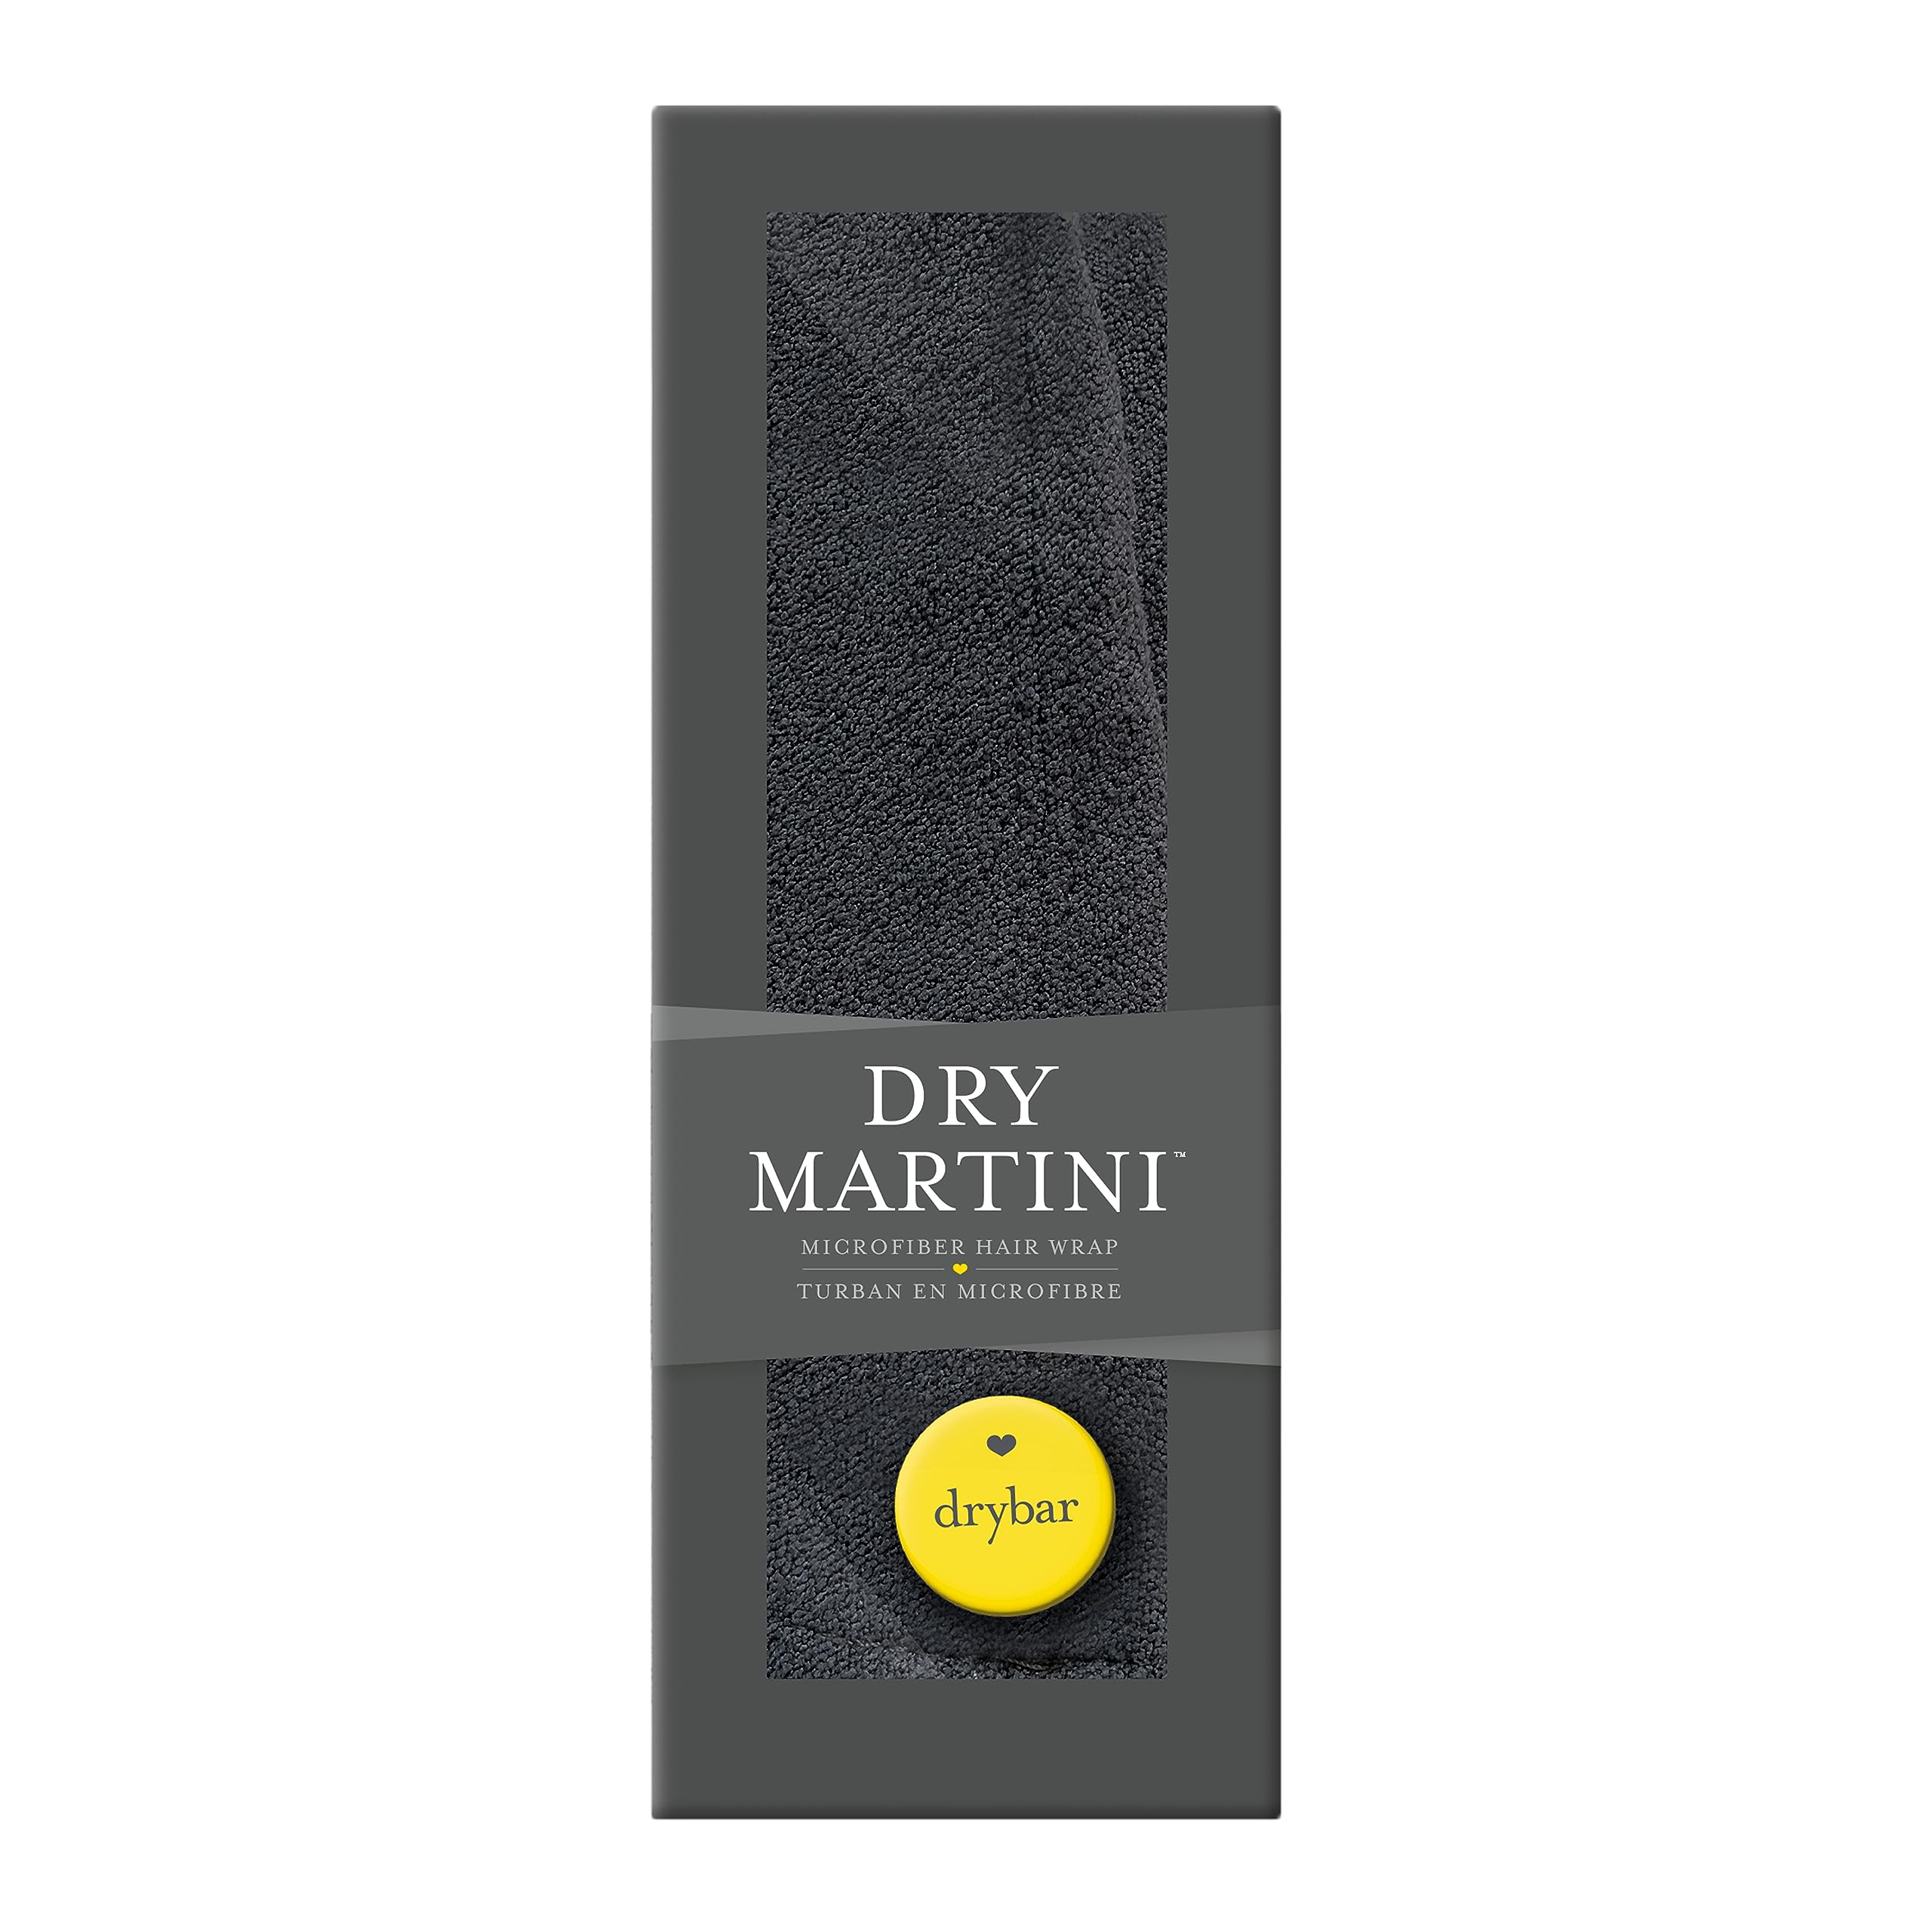 Drybar Dry Martini Microfiber Hair Wrap